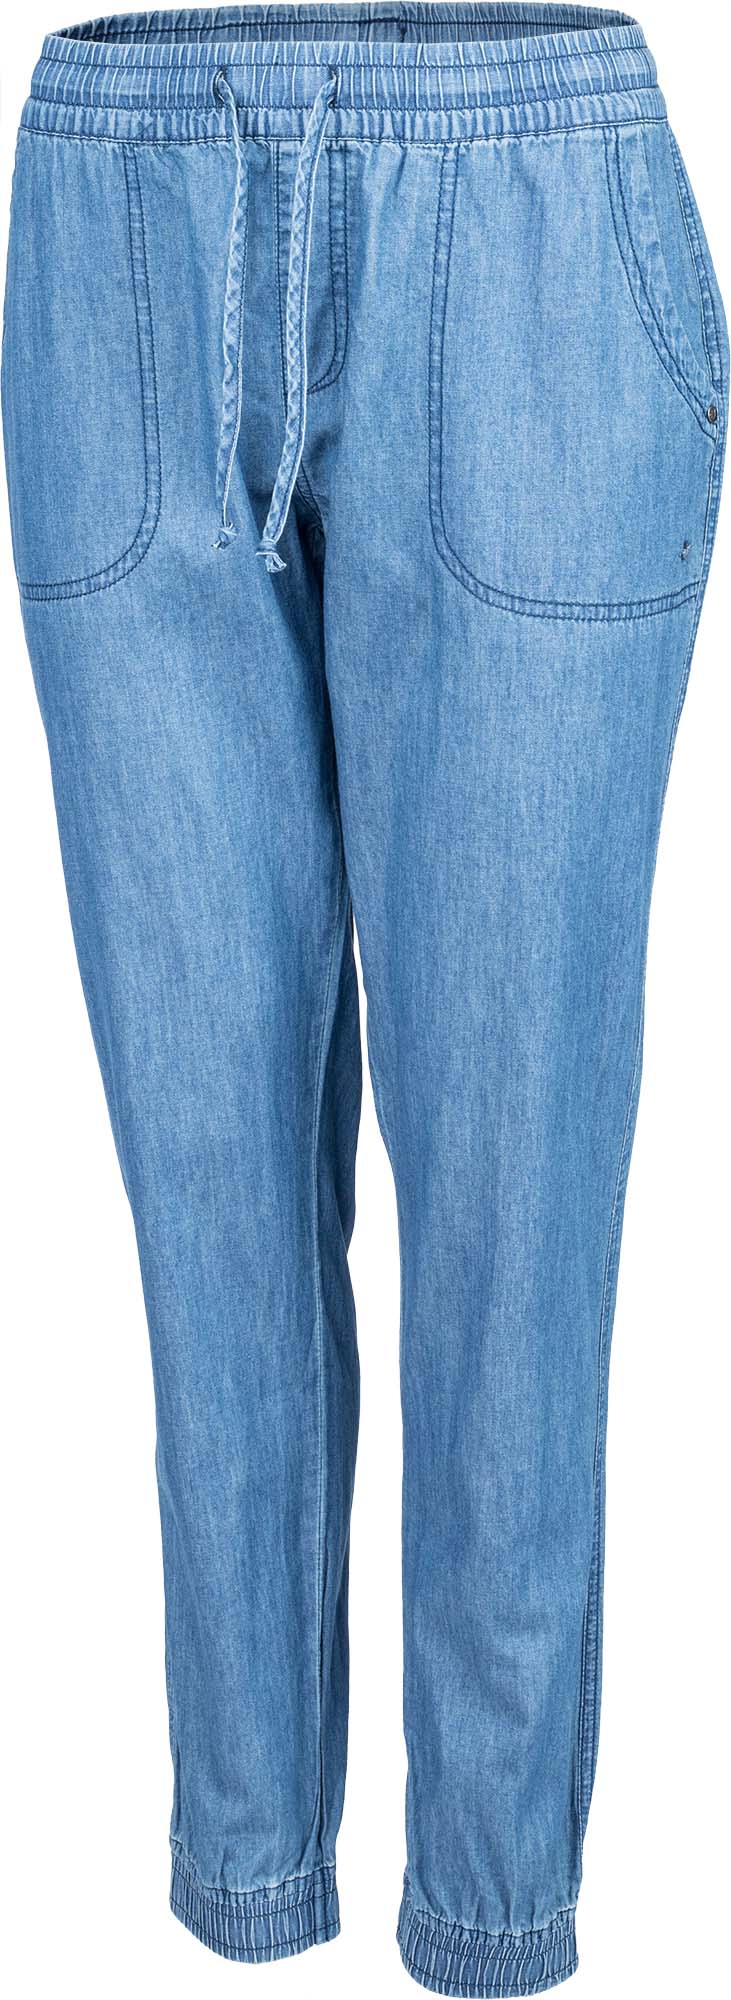 Women's jean pants